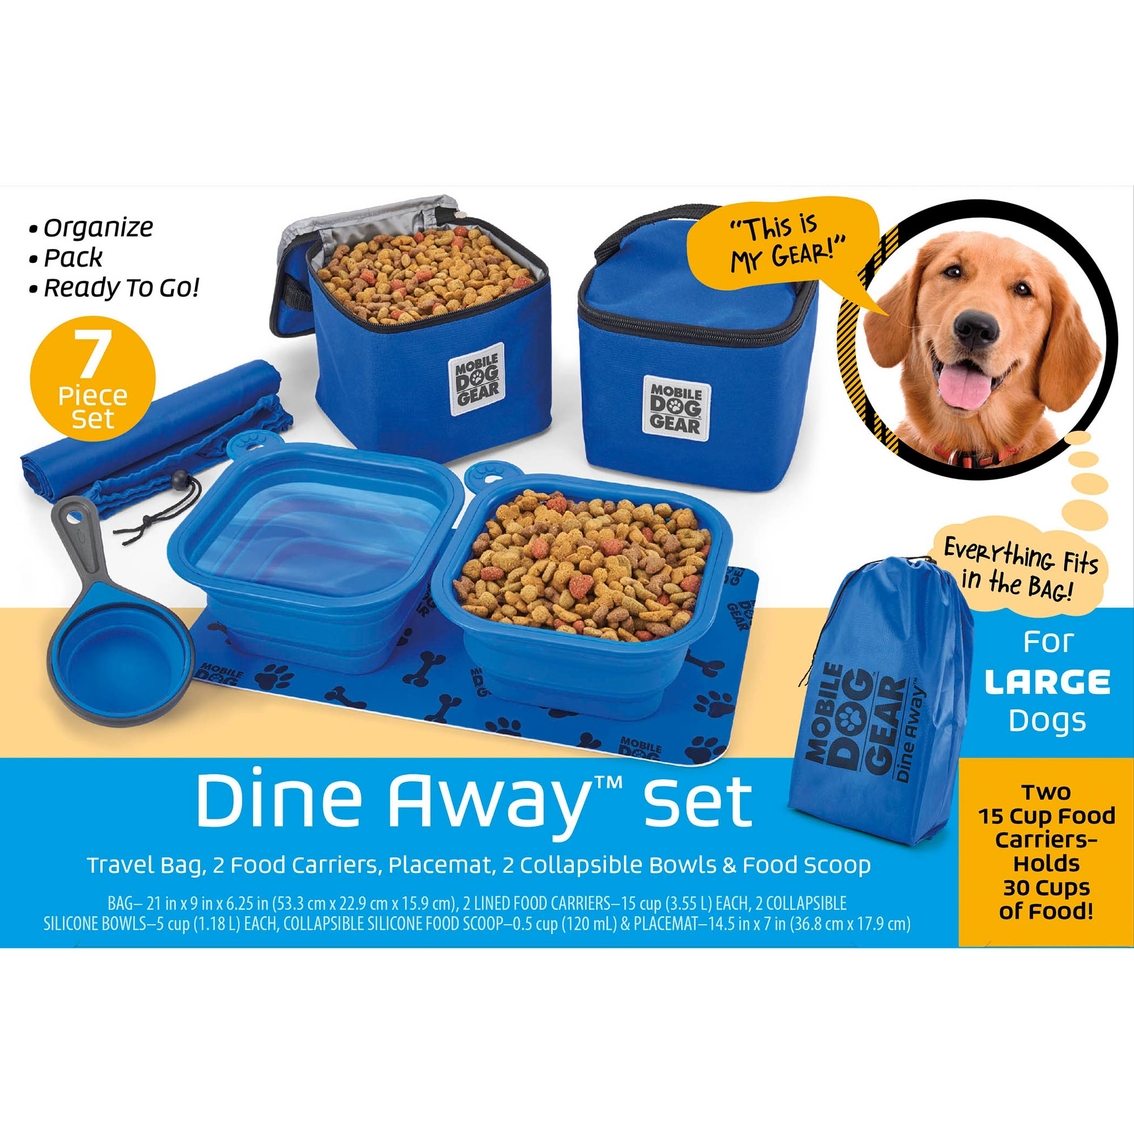 Mobile Dog Gear Dine Away Bag - Image 5 of 7